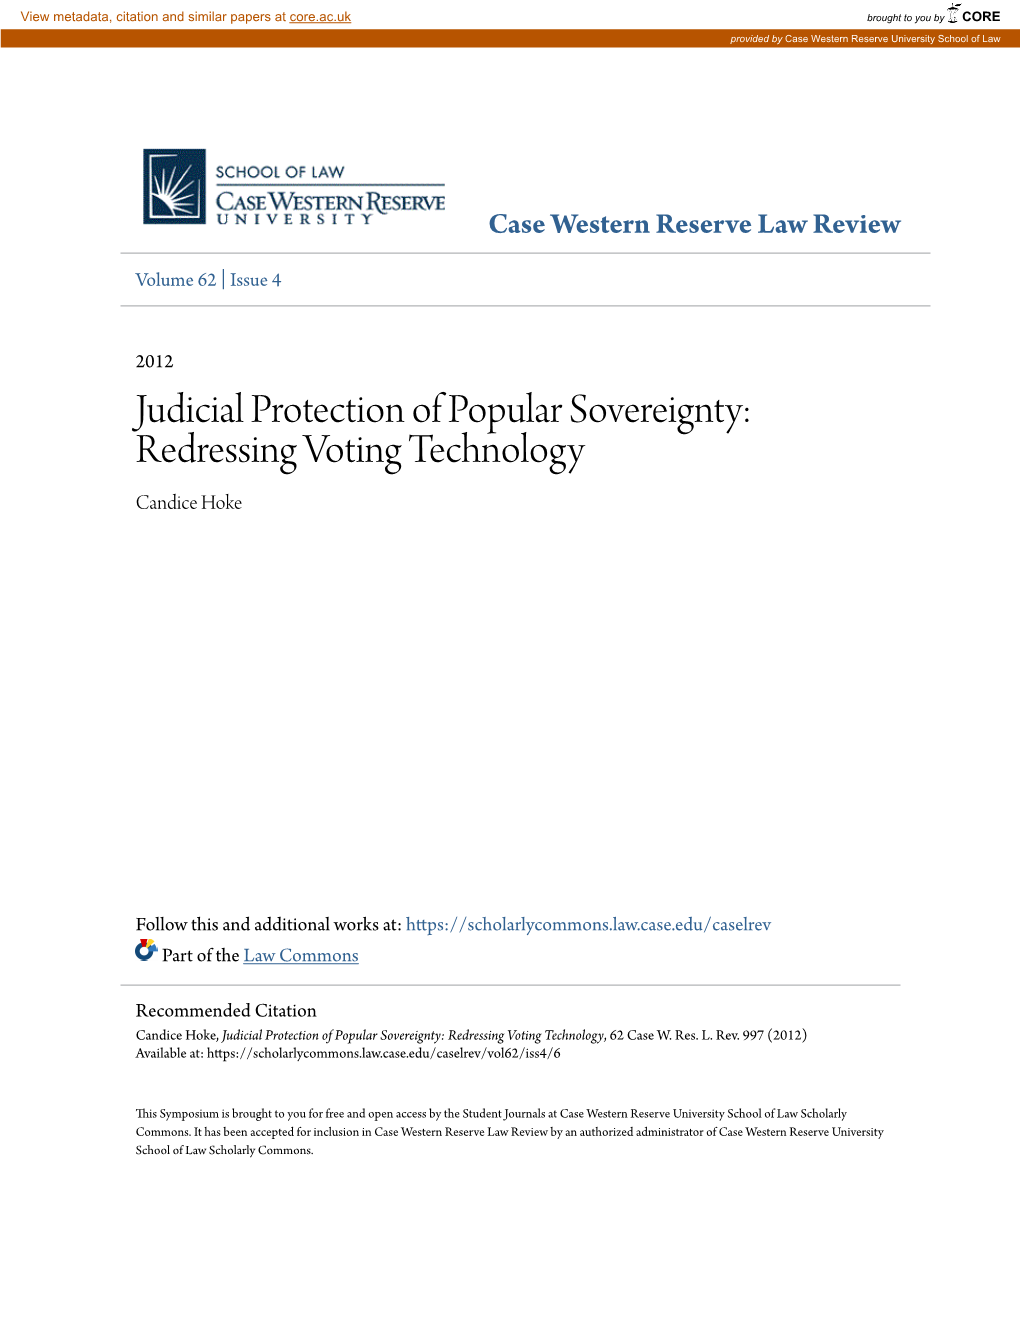 Redressing Voting Technology Candice Hoke